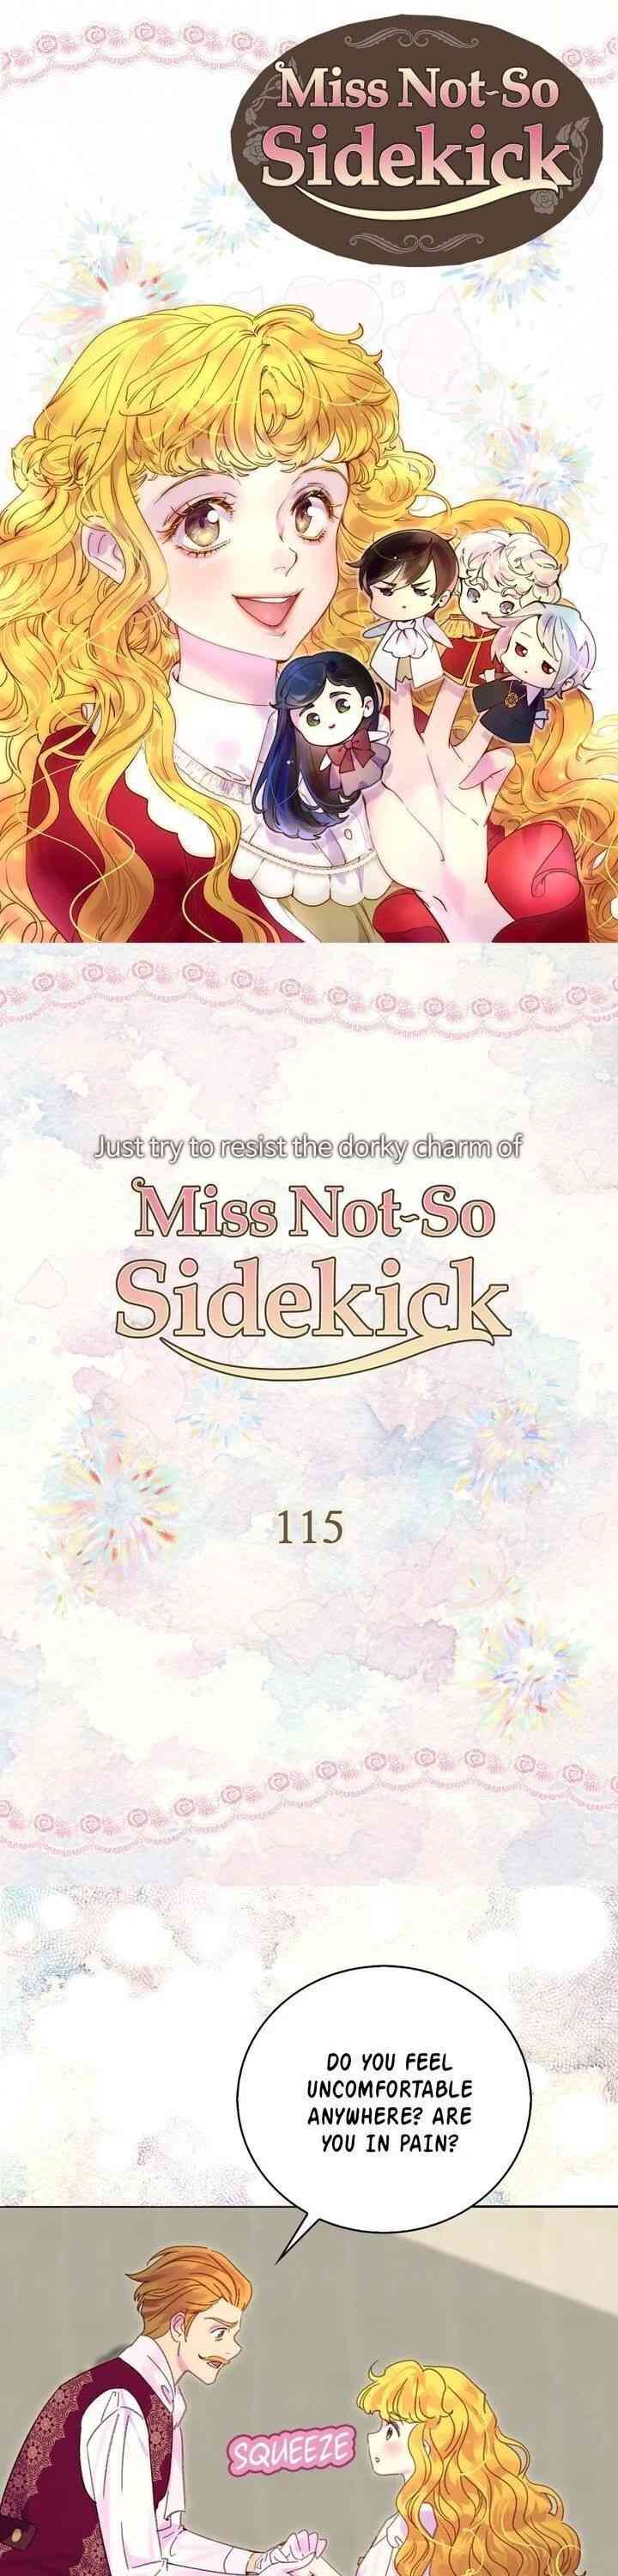 Miss Not-So Sidekick Chapter 115 page 1